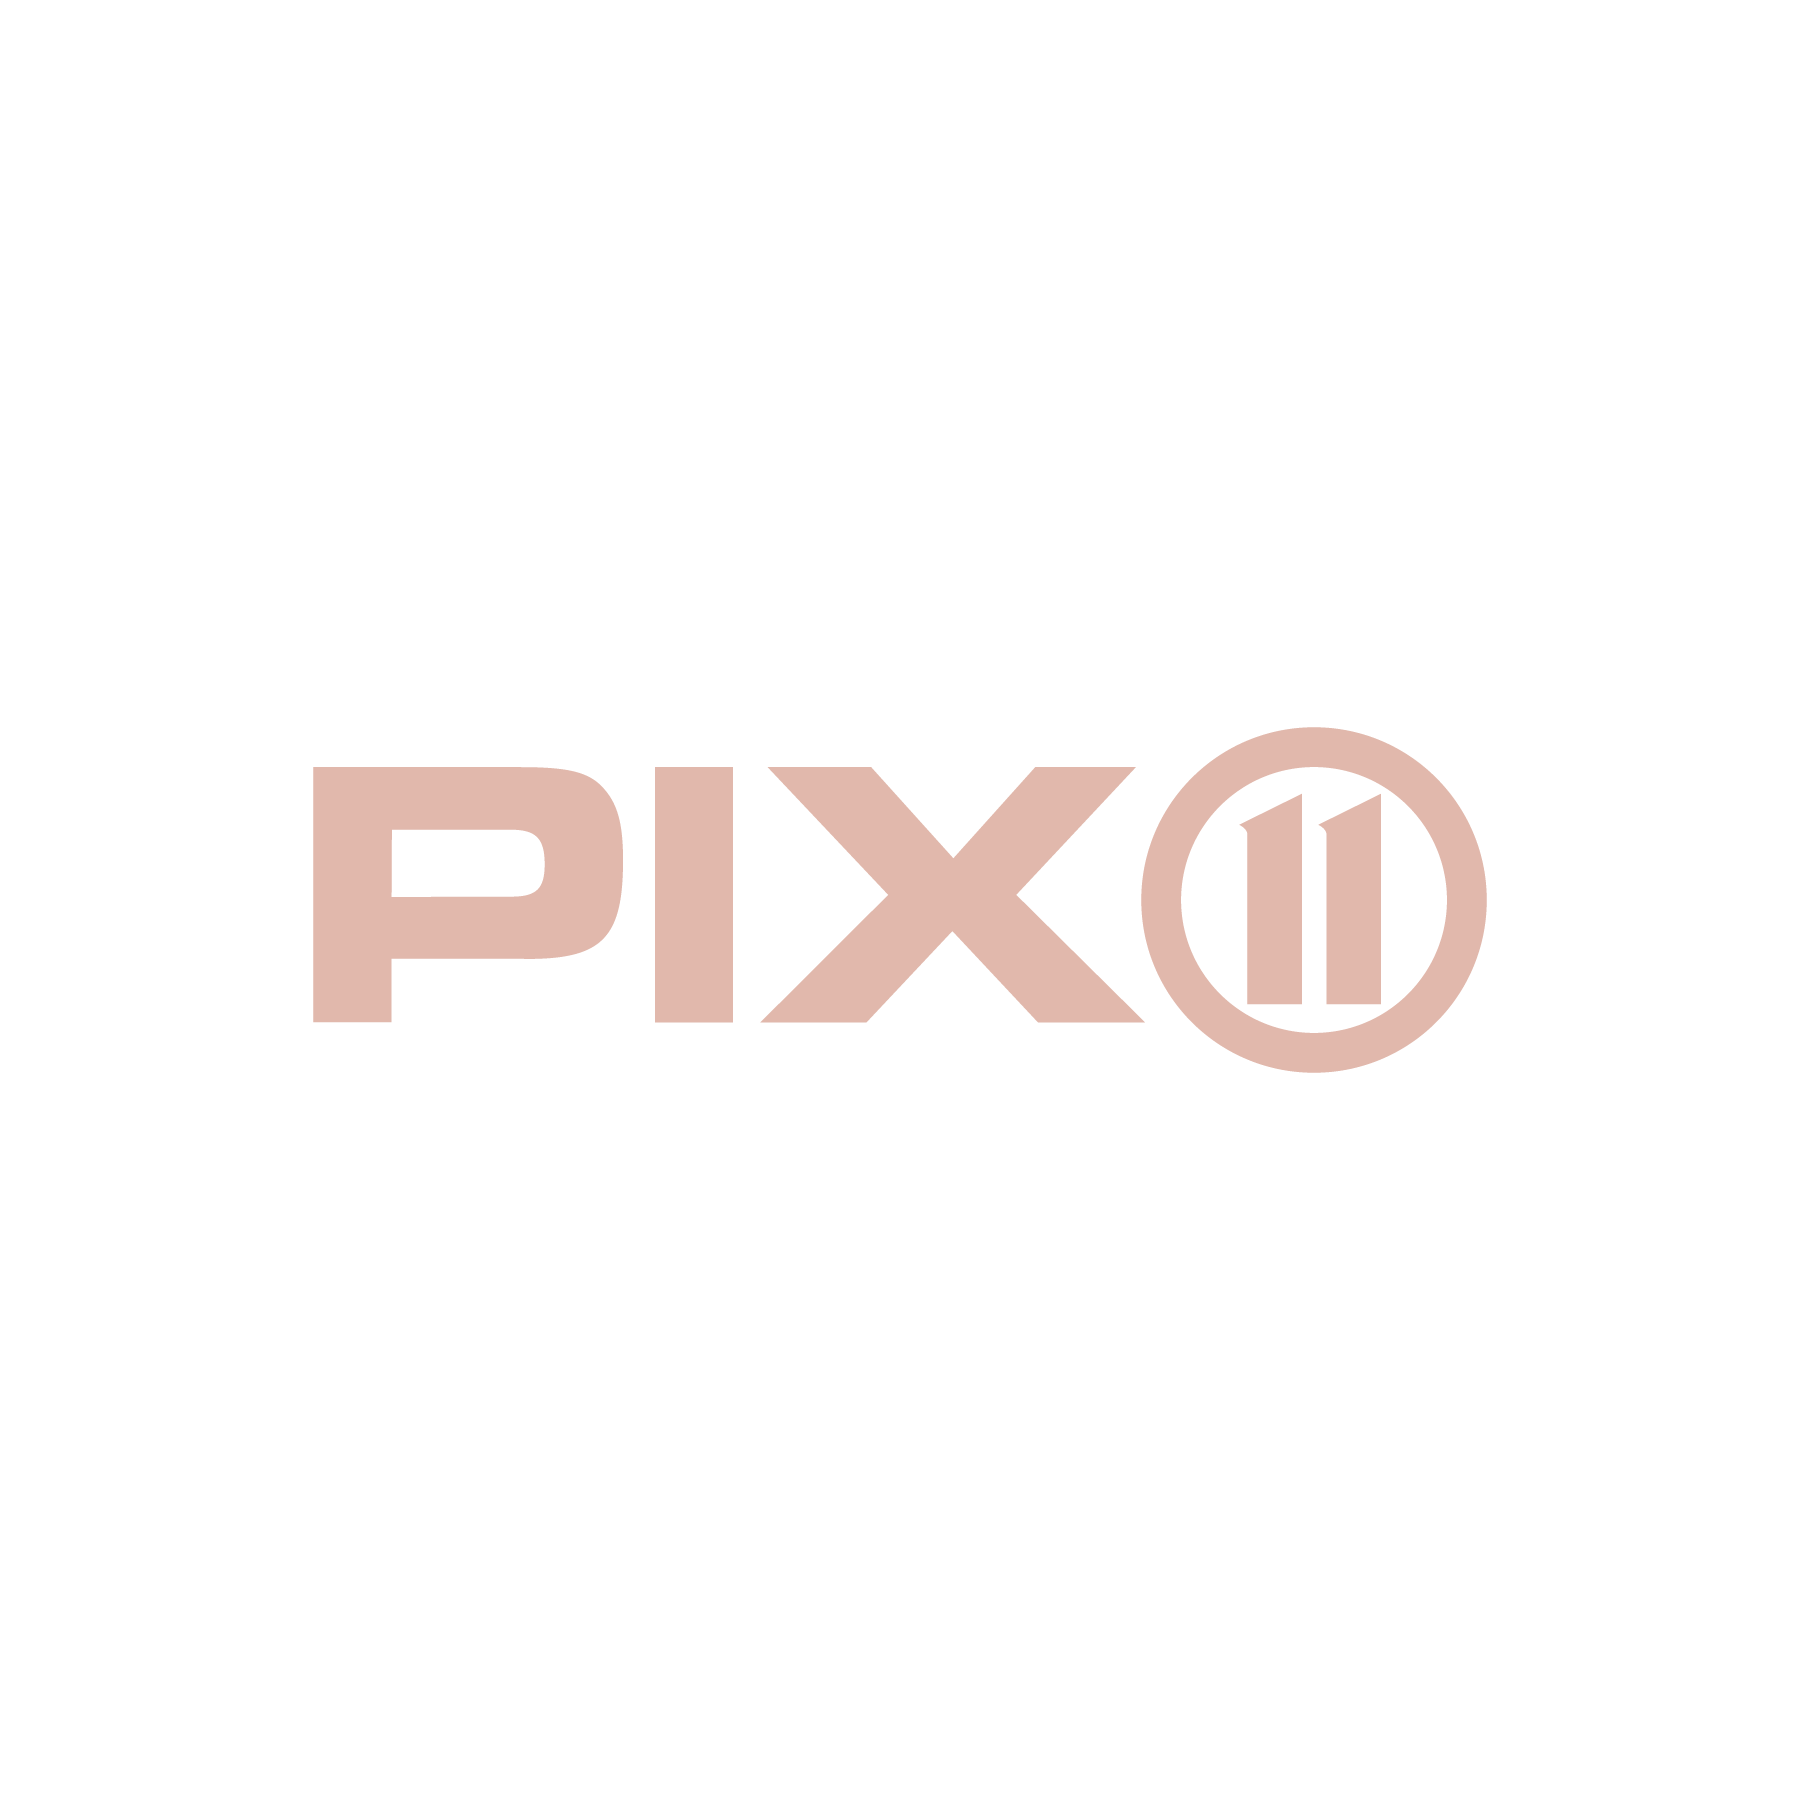 PIX11 Tv Appearance  (Copy)